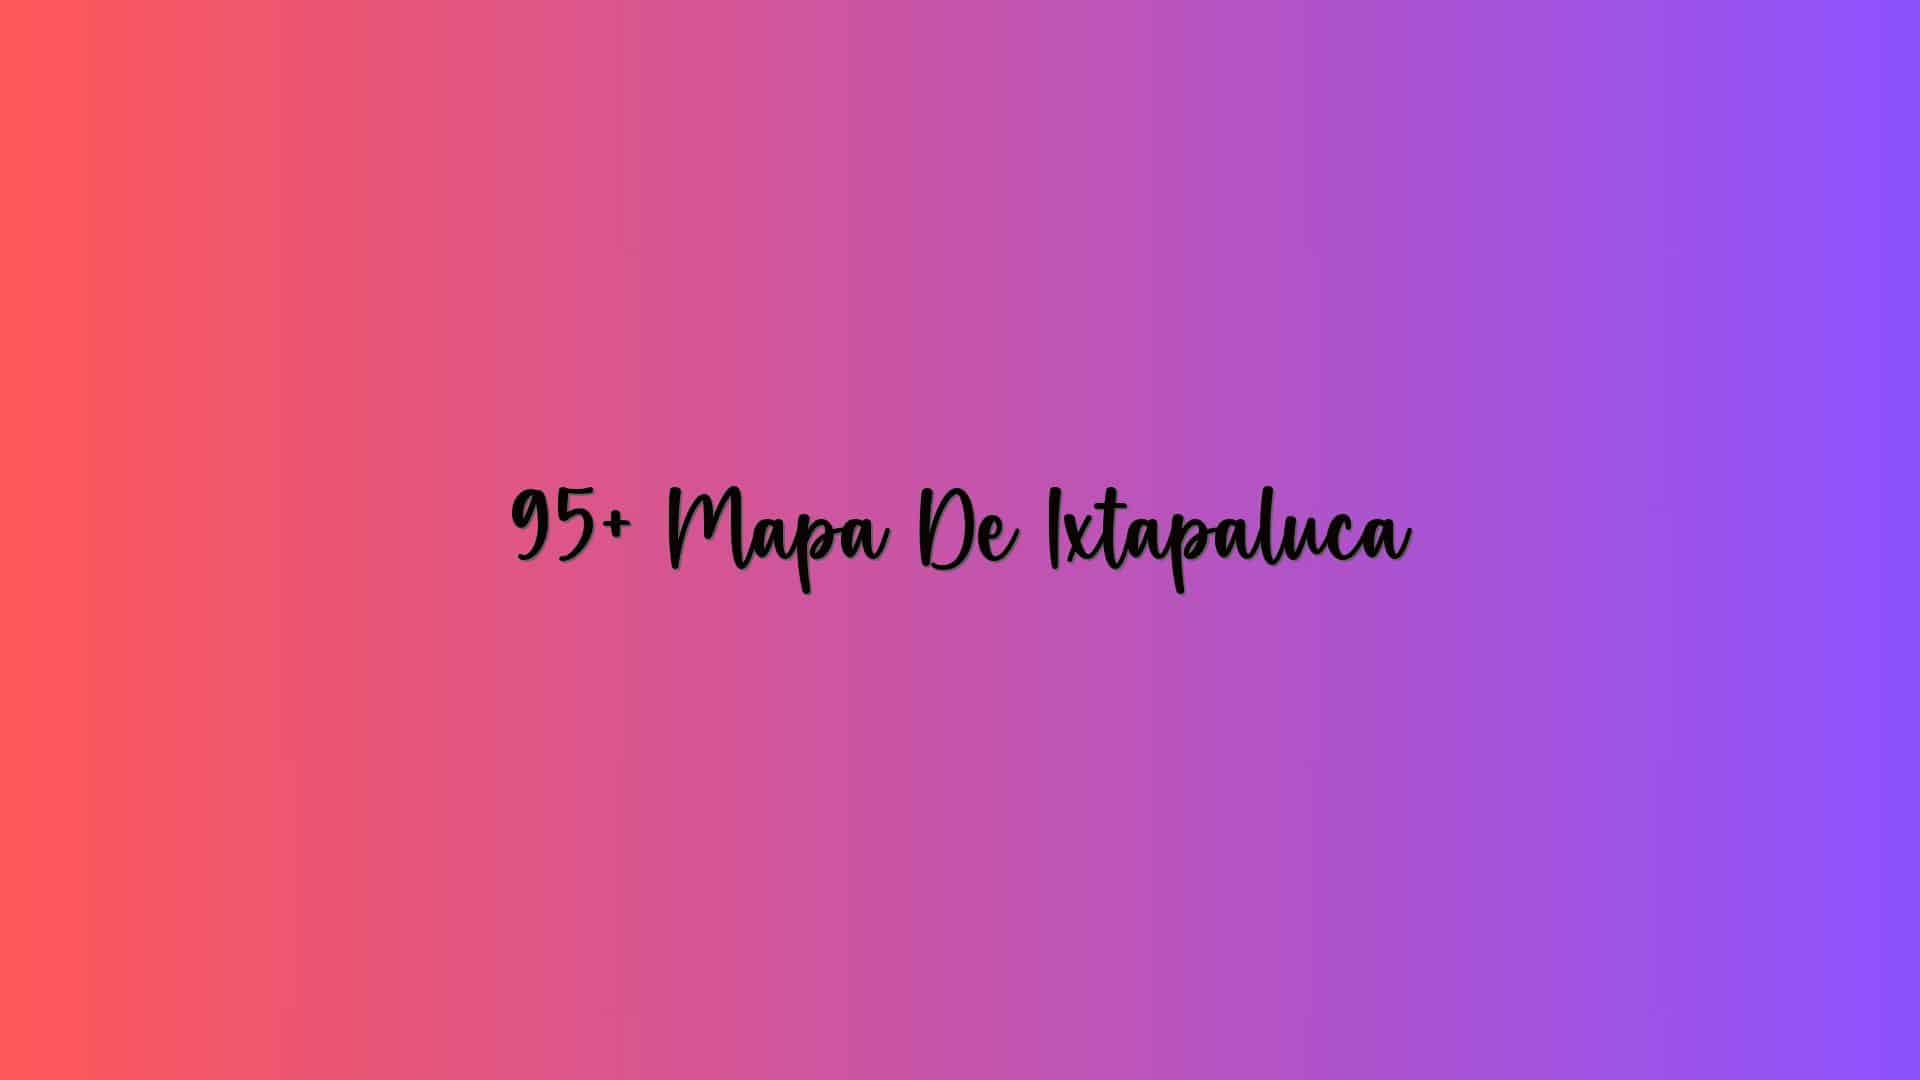 95+ Mapa De Ixtapaluca